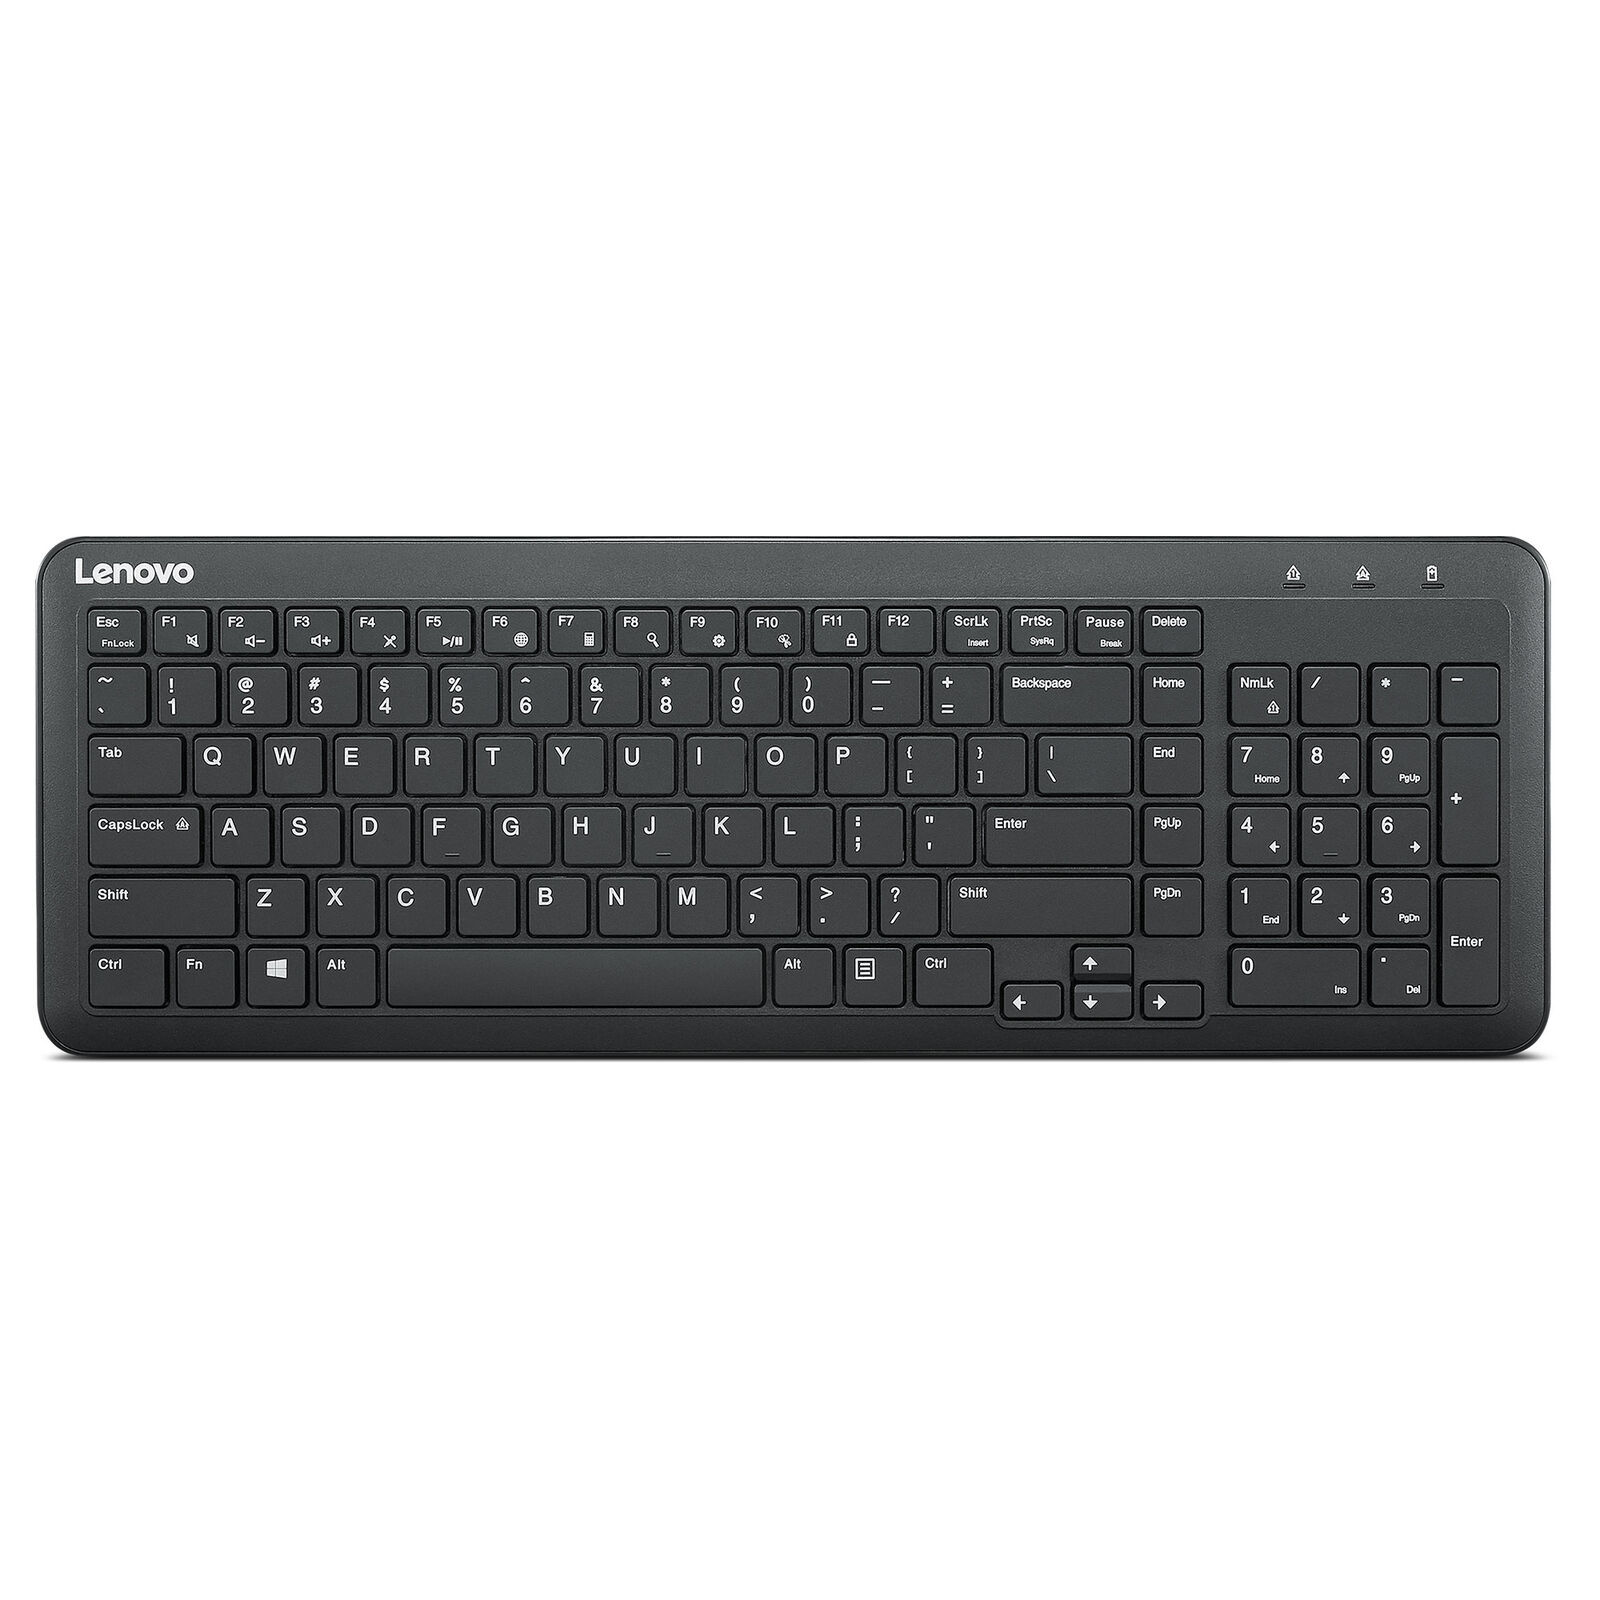 Primary image for Lenovo 300 Wireless Keyboard - US English